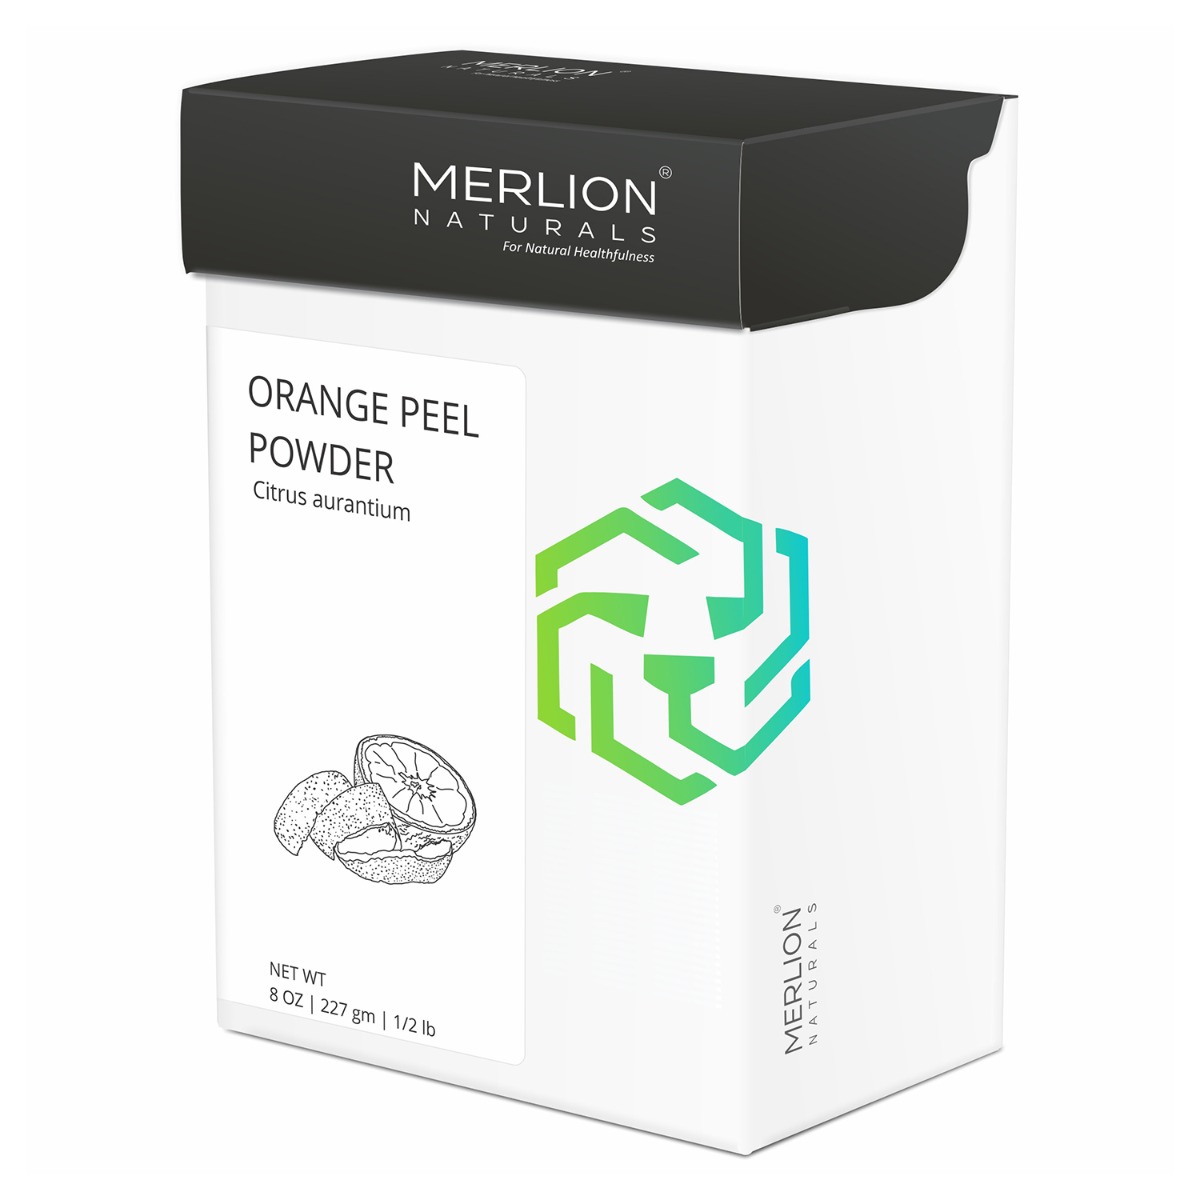 Merlion Naturals Orange Peel Powder, 227gm